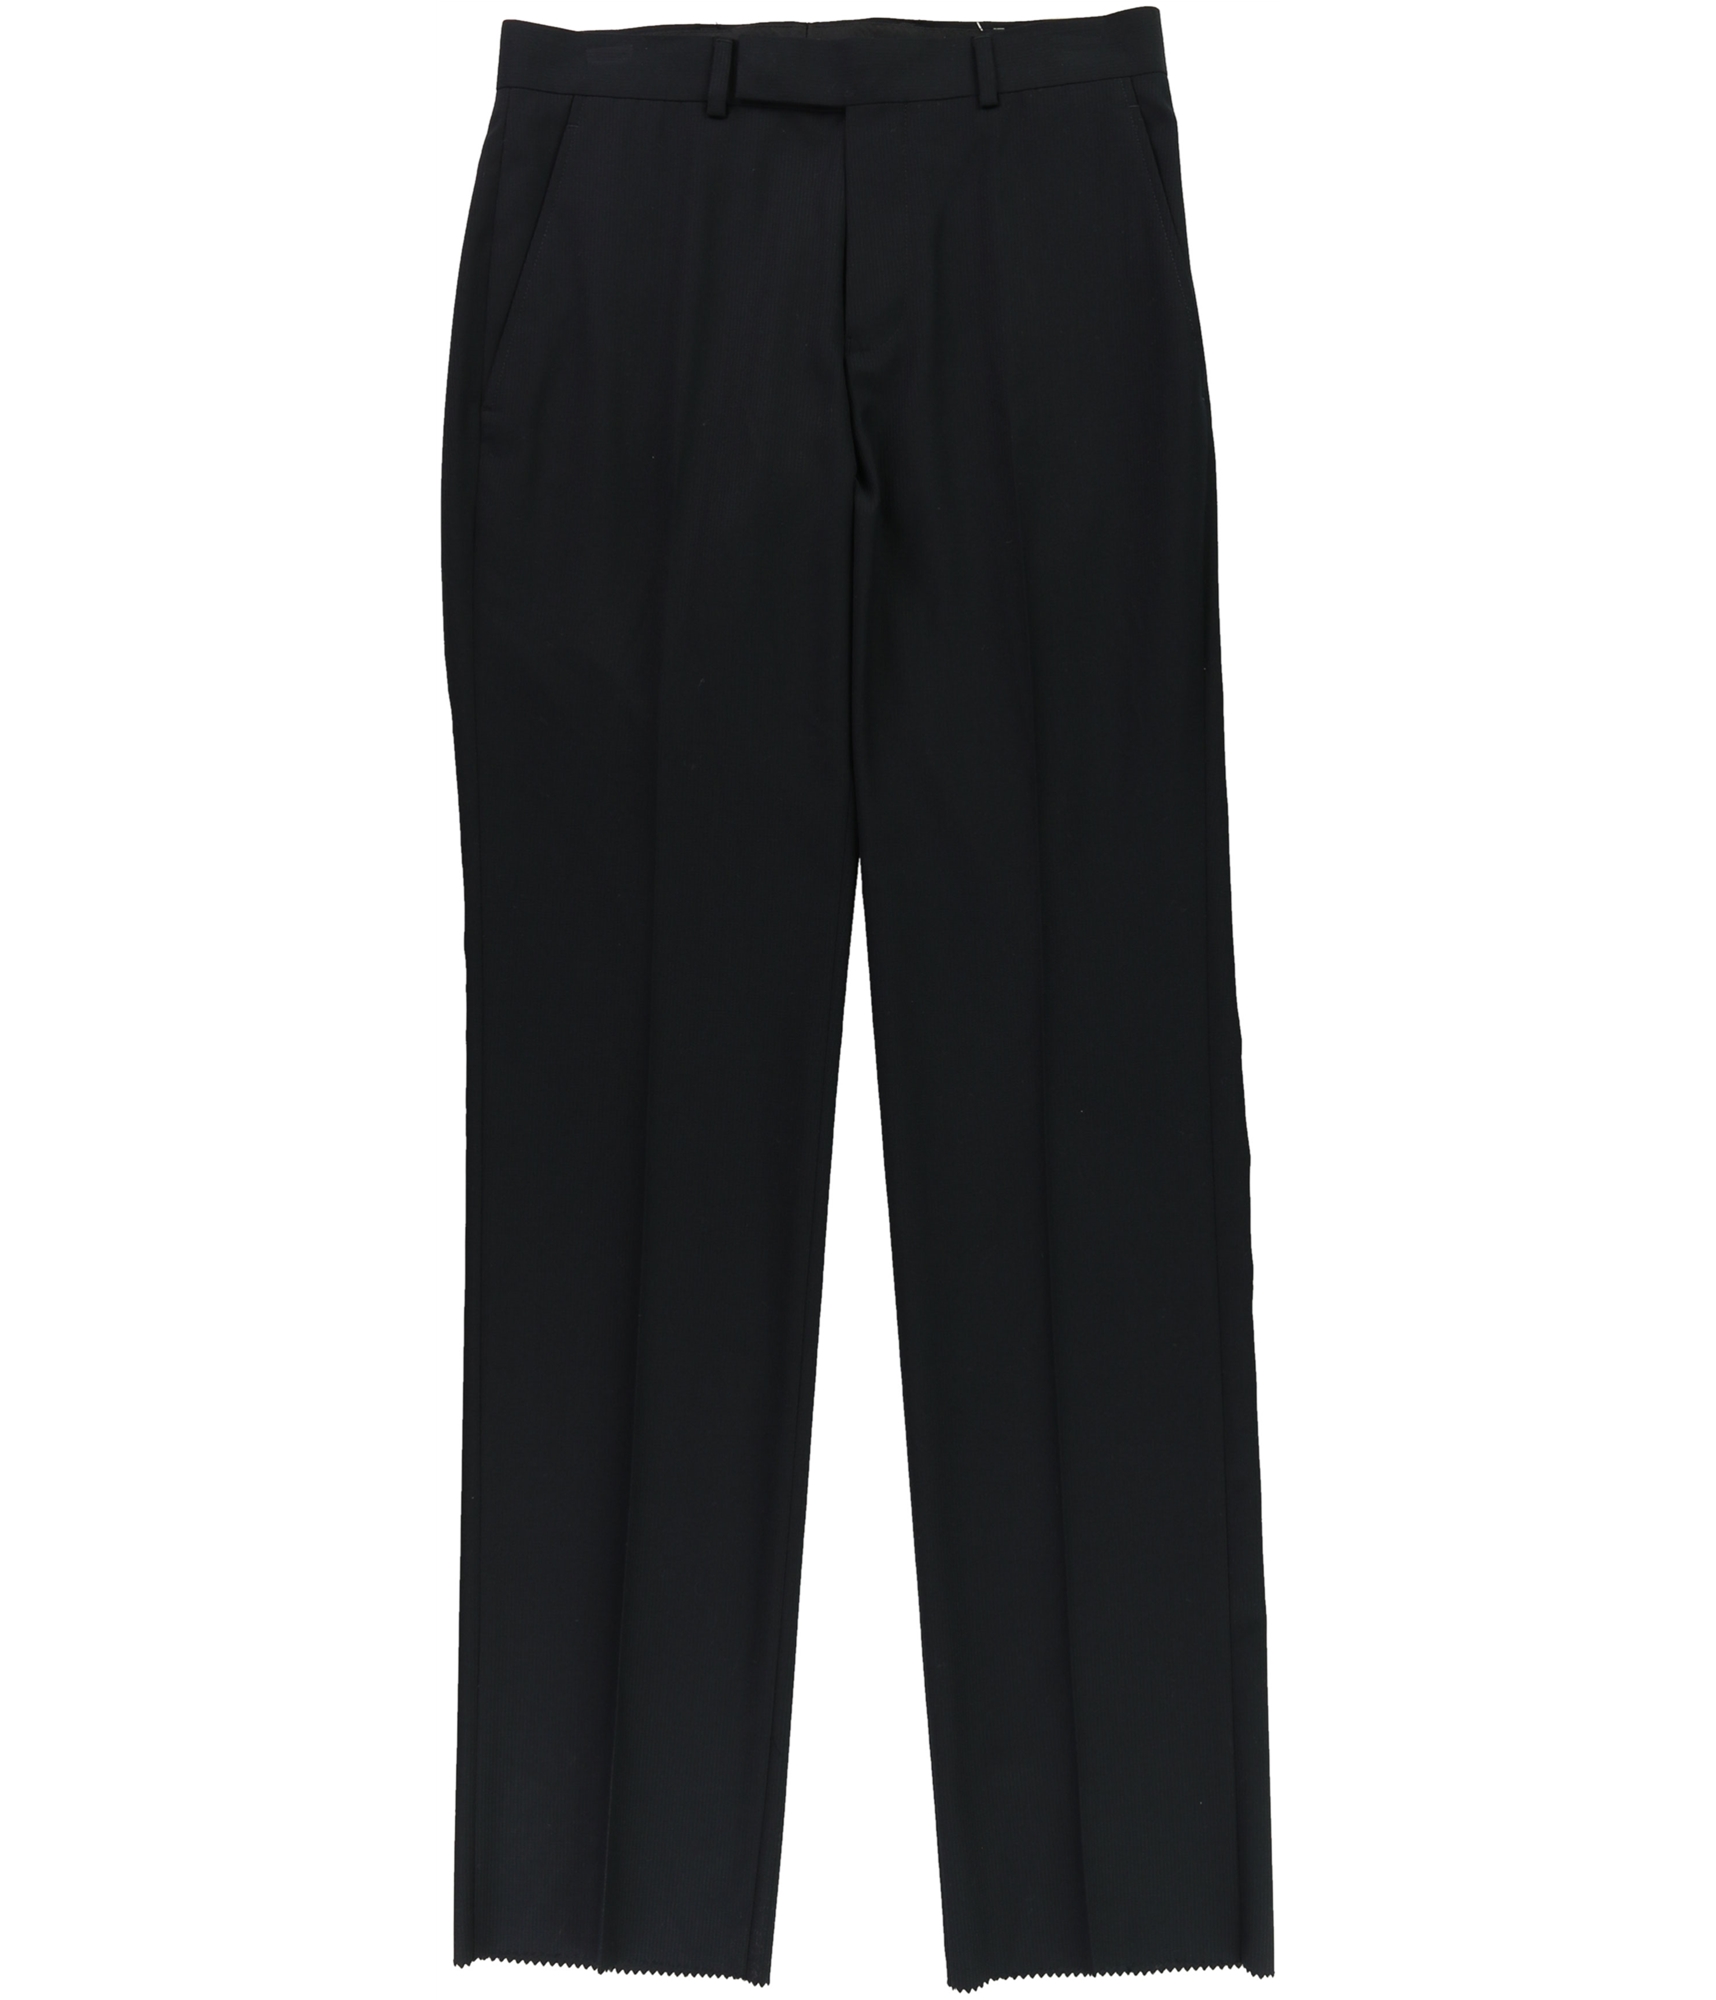 Kenneth Cole Mens Suit Dress Pants Slacks, Black, 29W x UnfinishedL | eBay